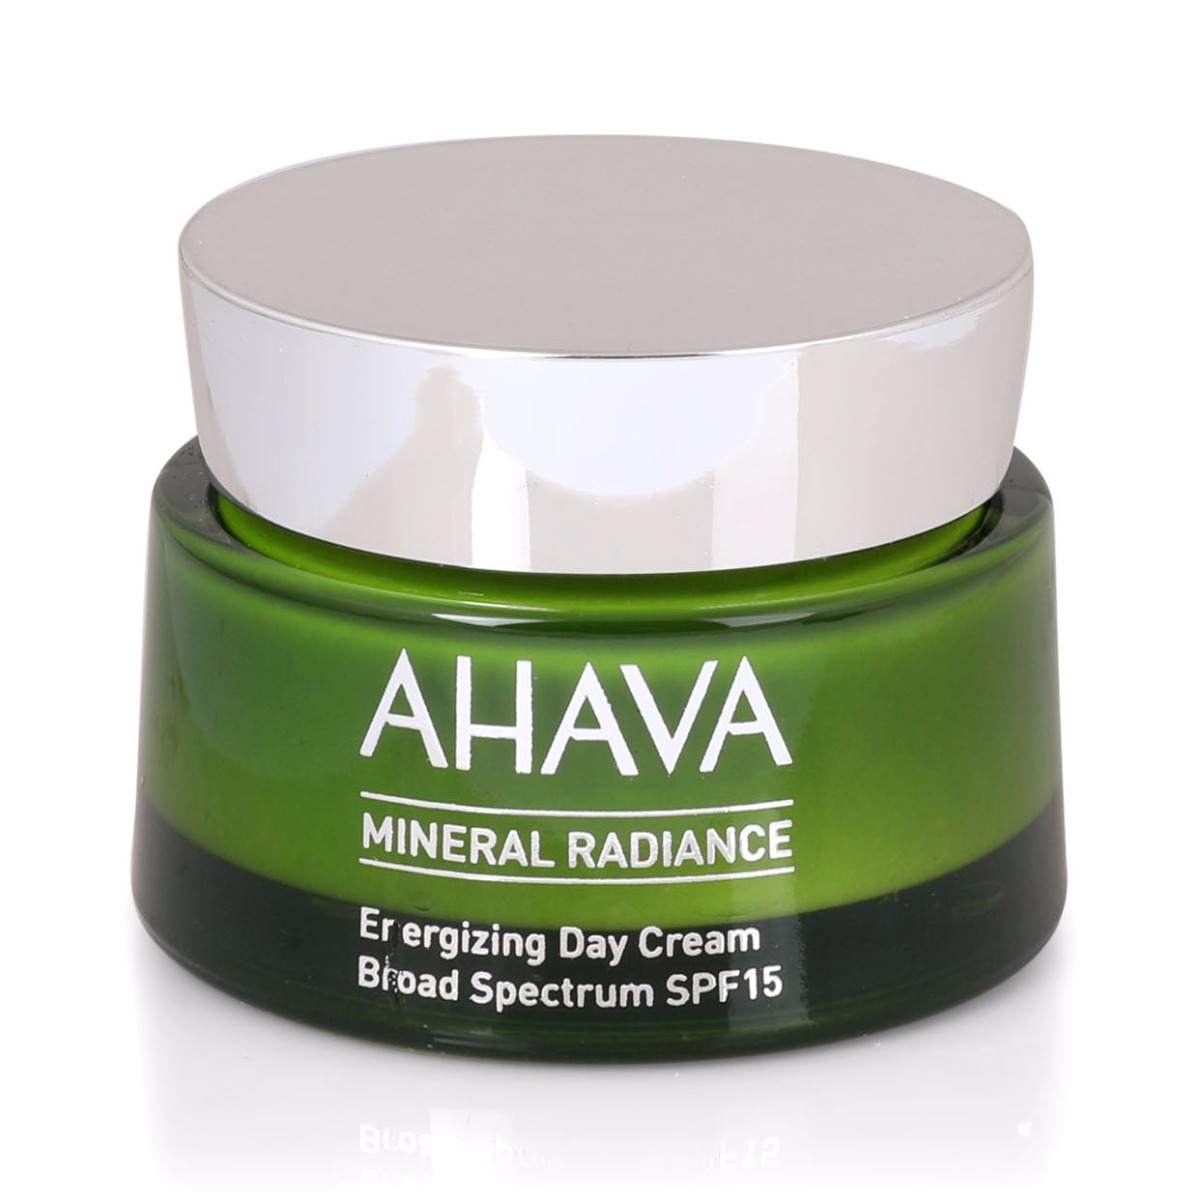 AHAVA Mineral Radiance Energizing Day Cream SPF 15 - 1